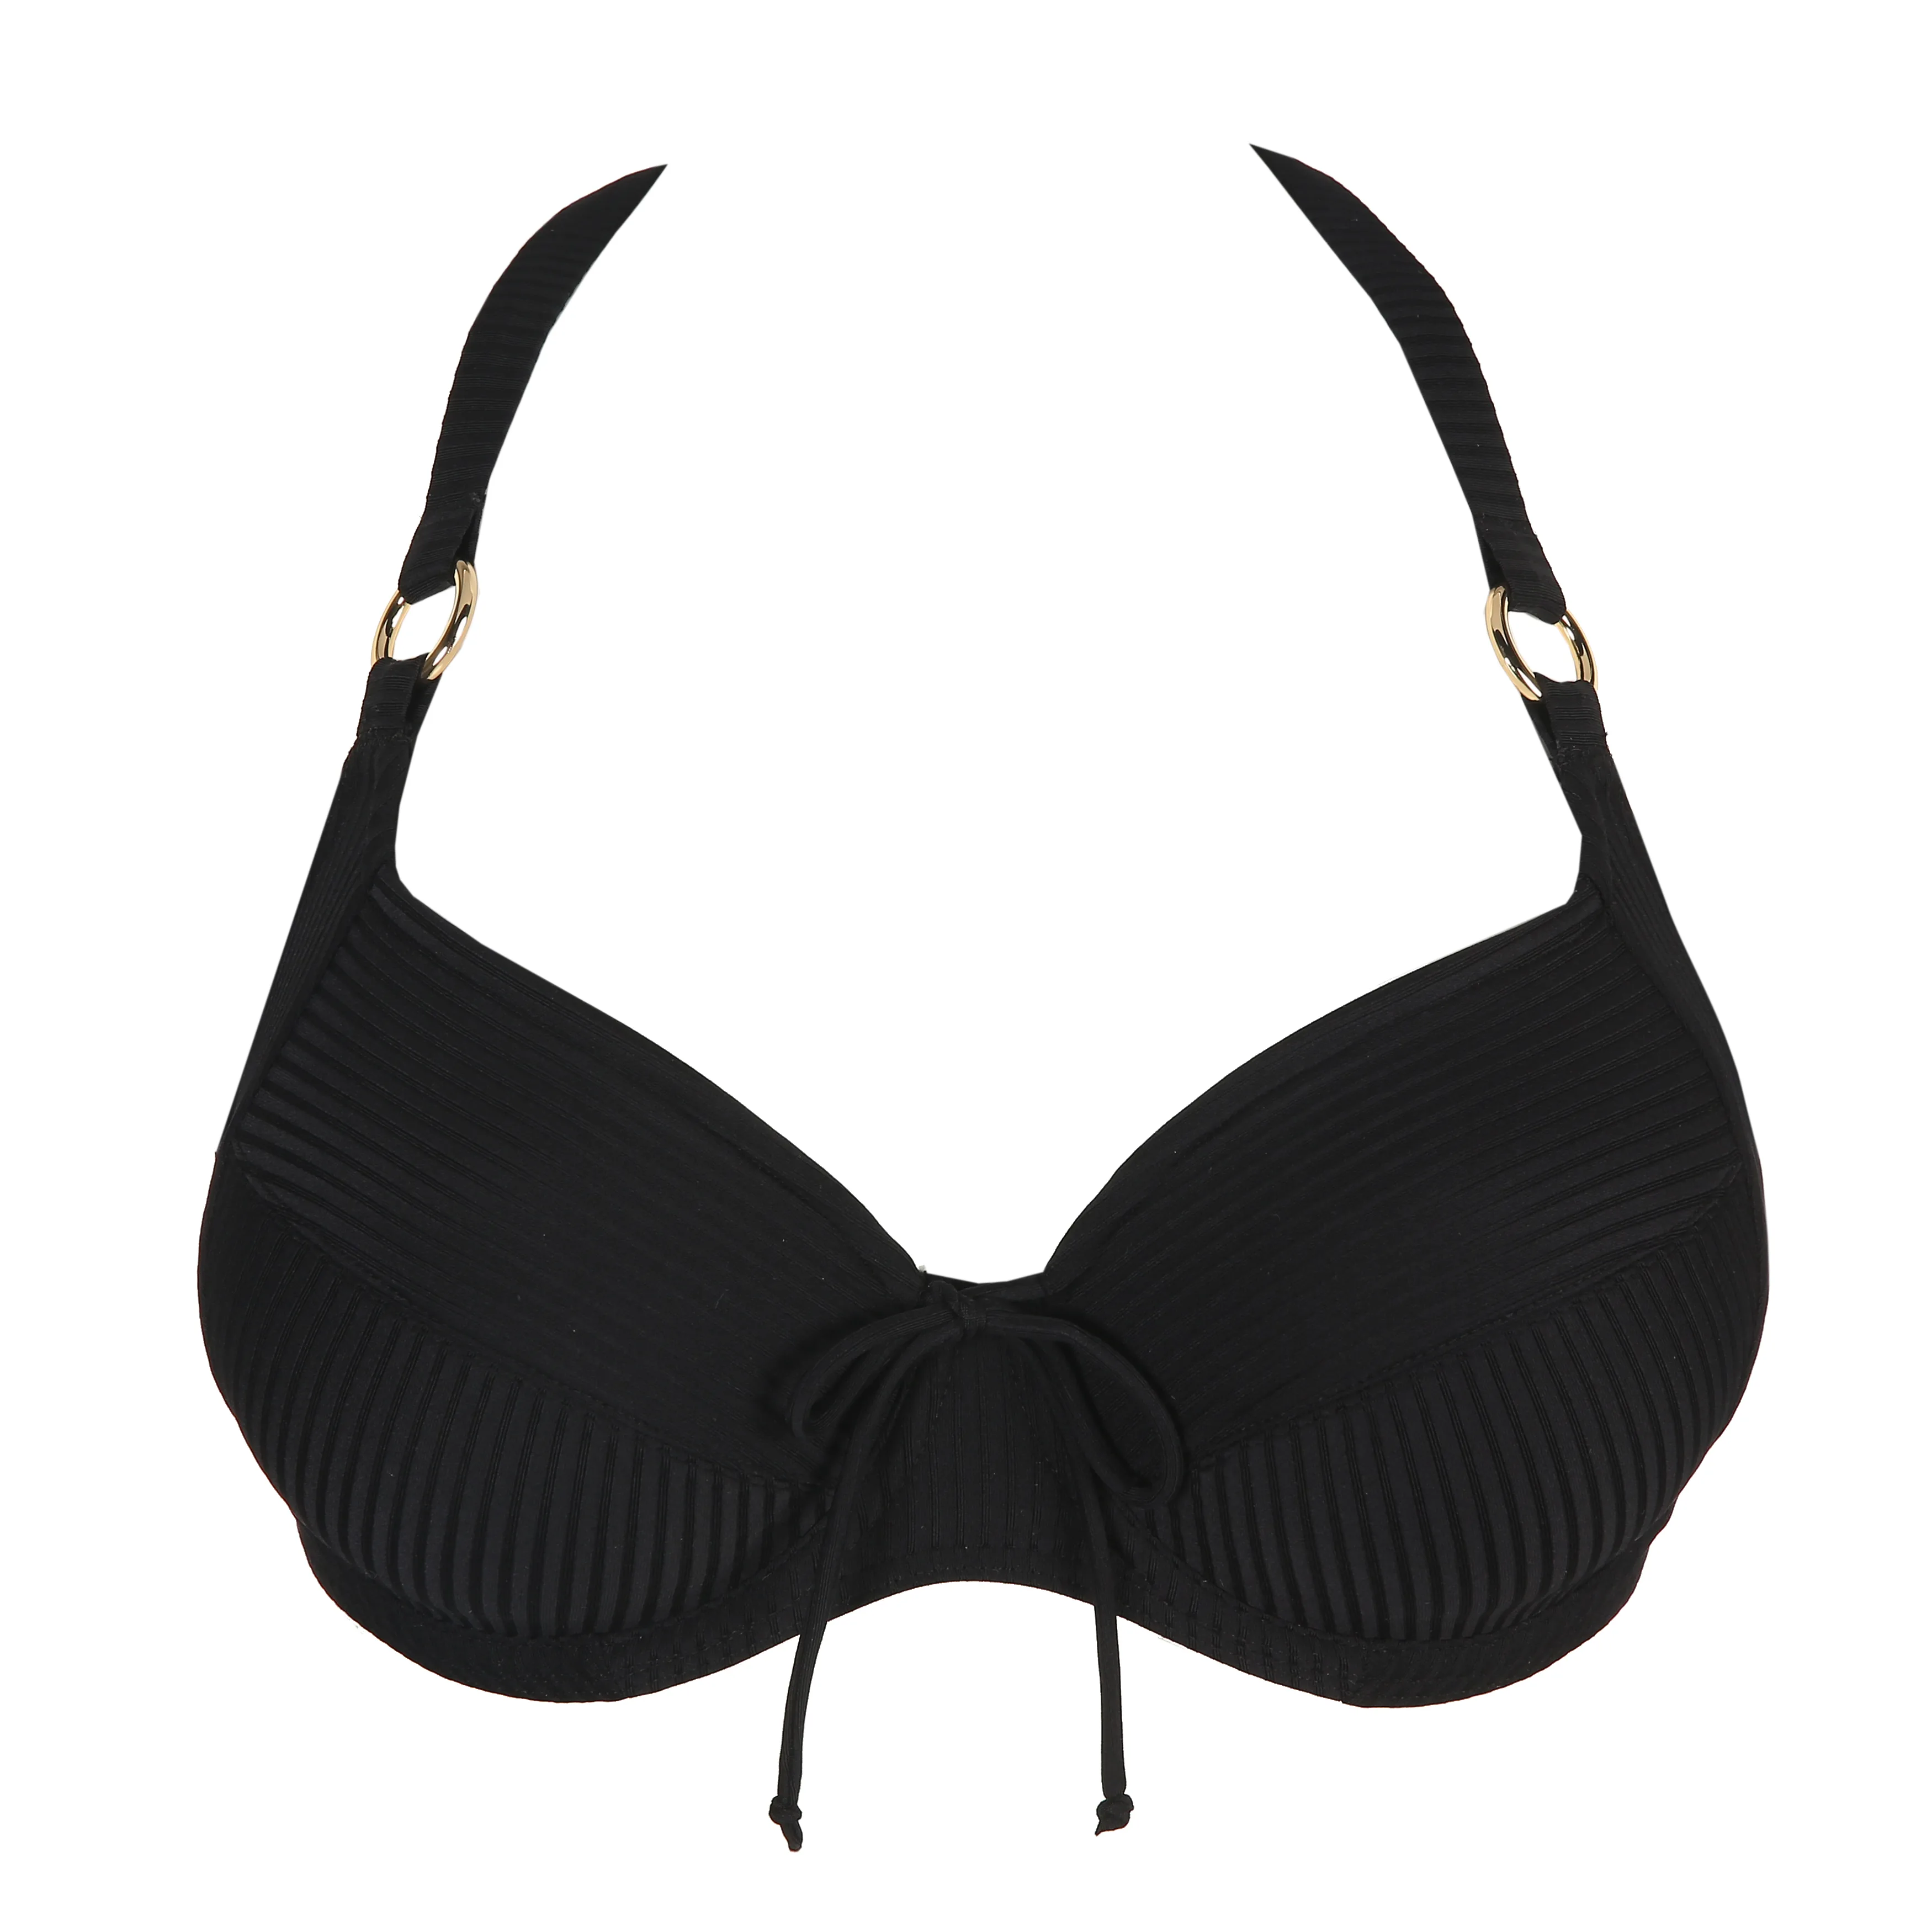 PrimaDonna Swim SOLTA Black full cup bikini top